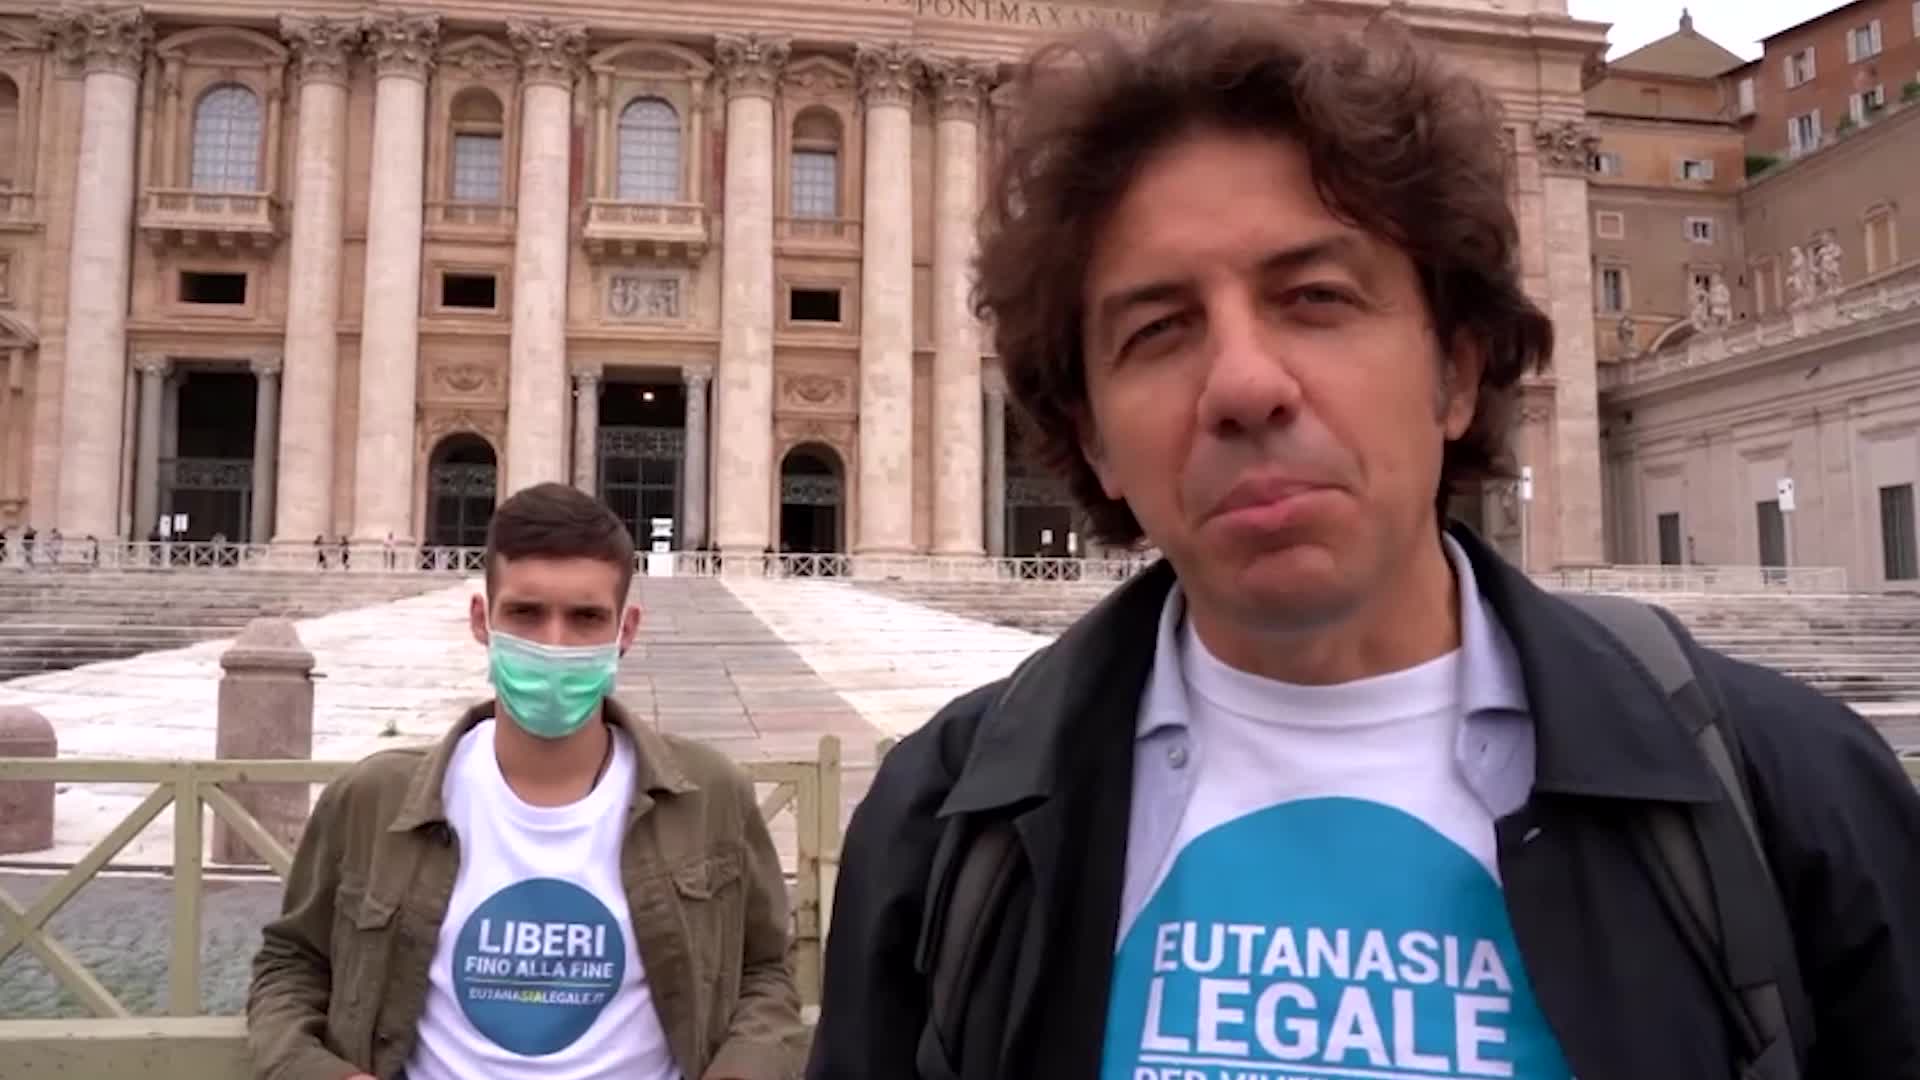 Marco Cappato Referendum eutanasia legale